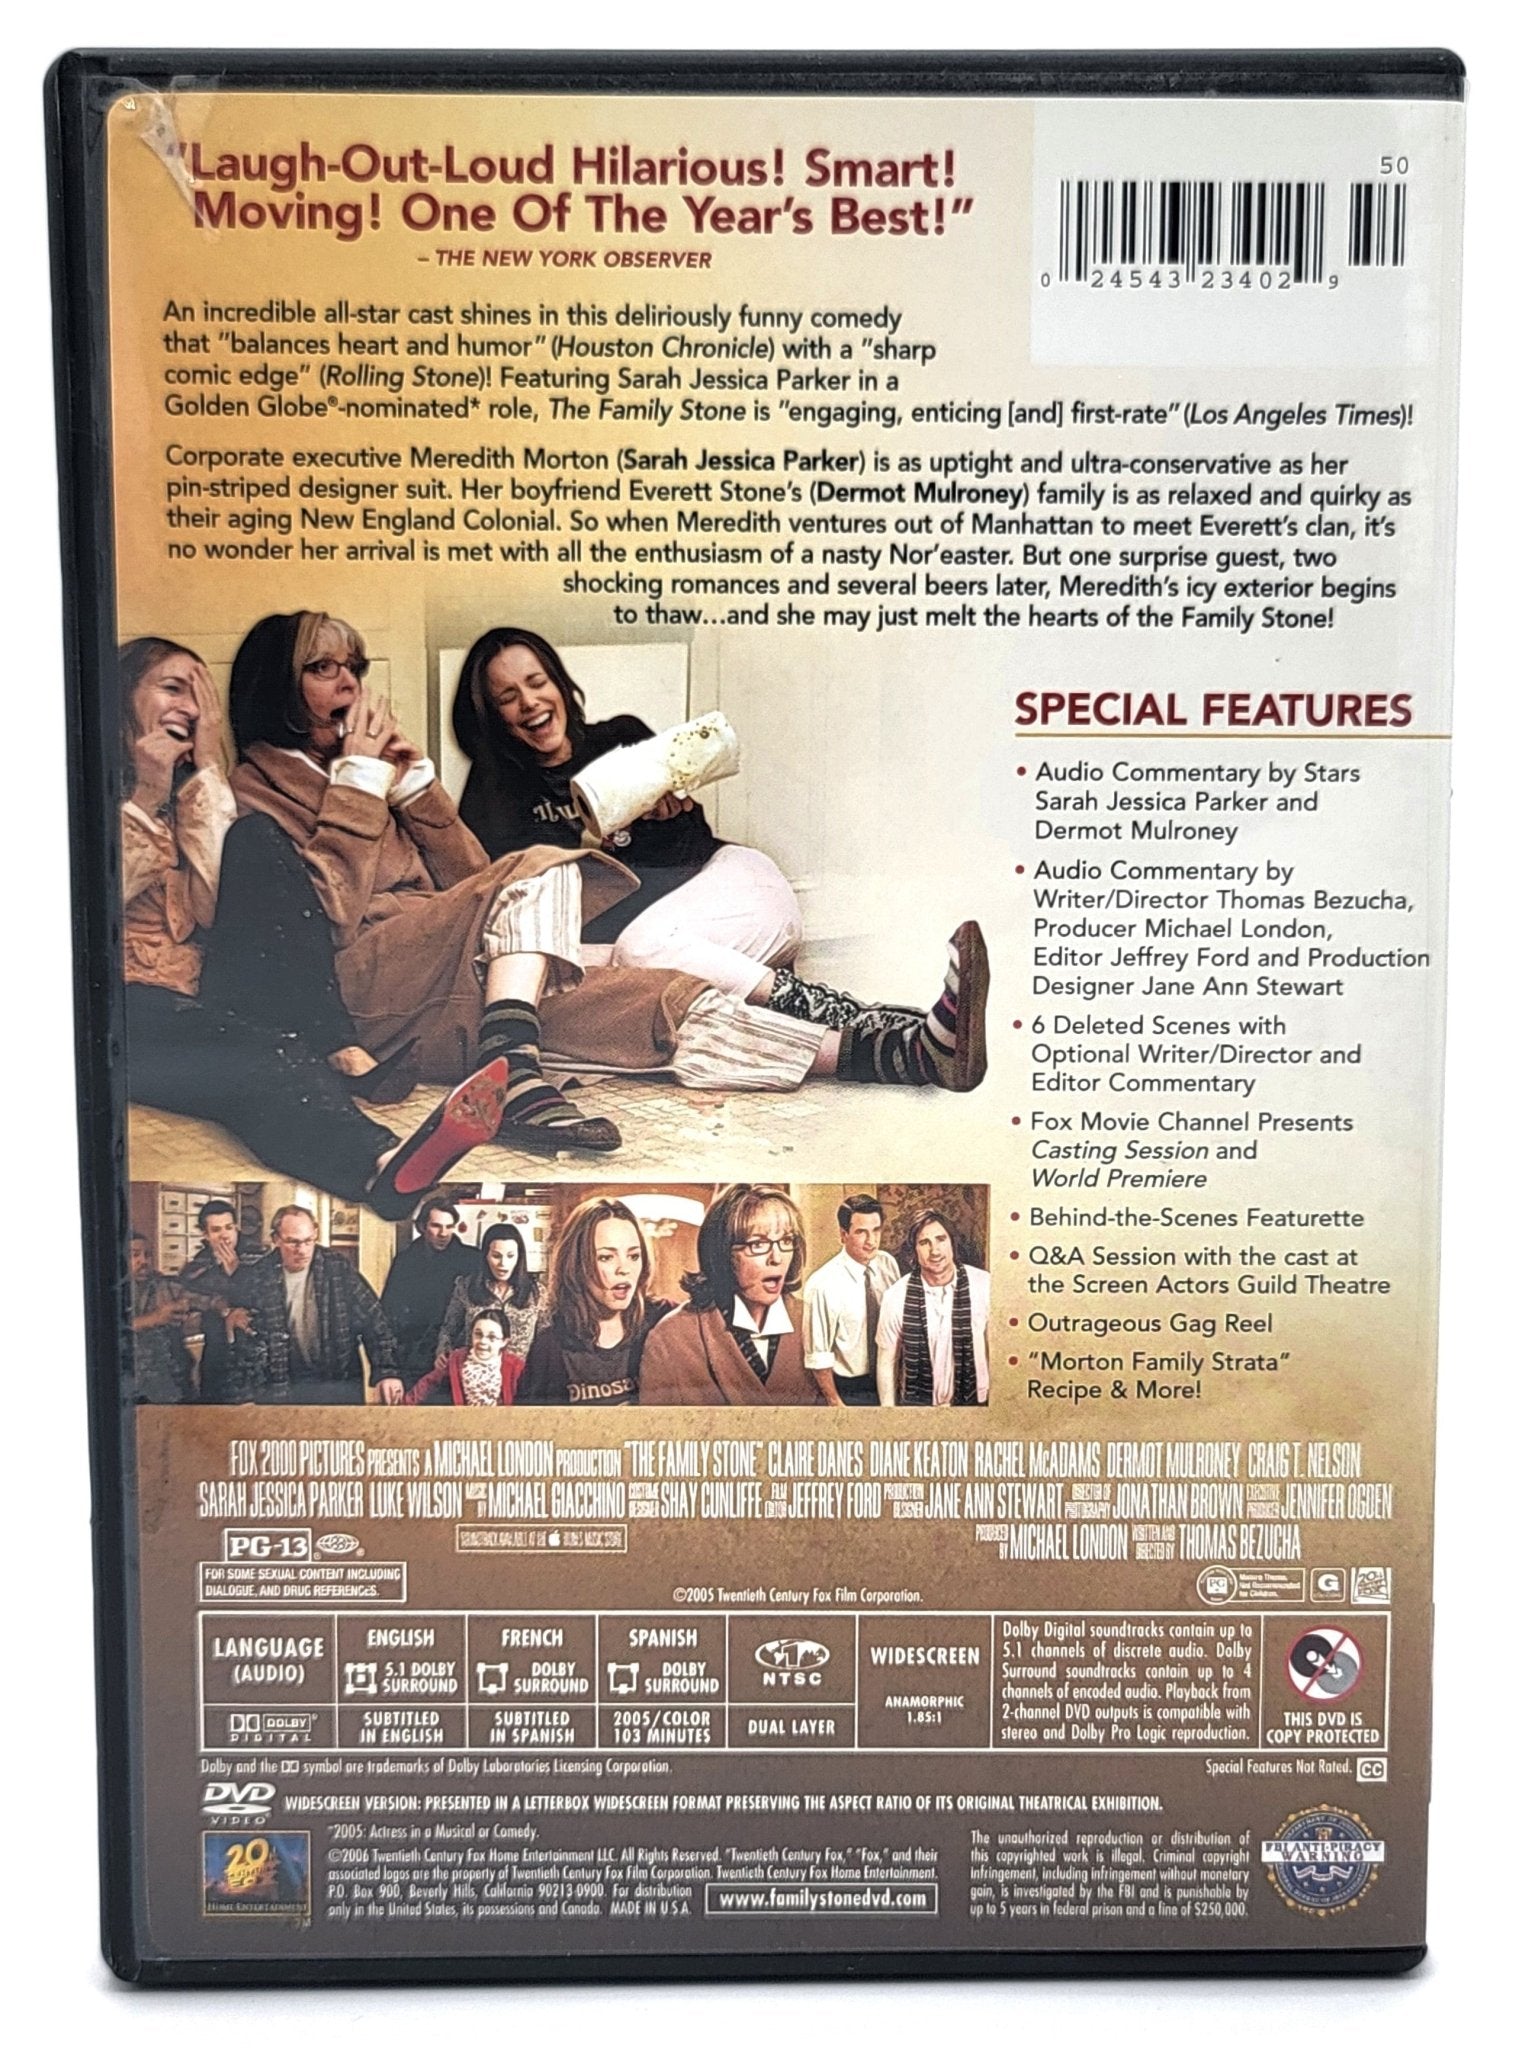 20th Century Fox Home Entertainment - The Family Stone | DVD | Widescreen - DVD - Steady Bunny Shop